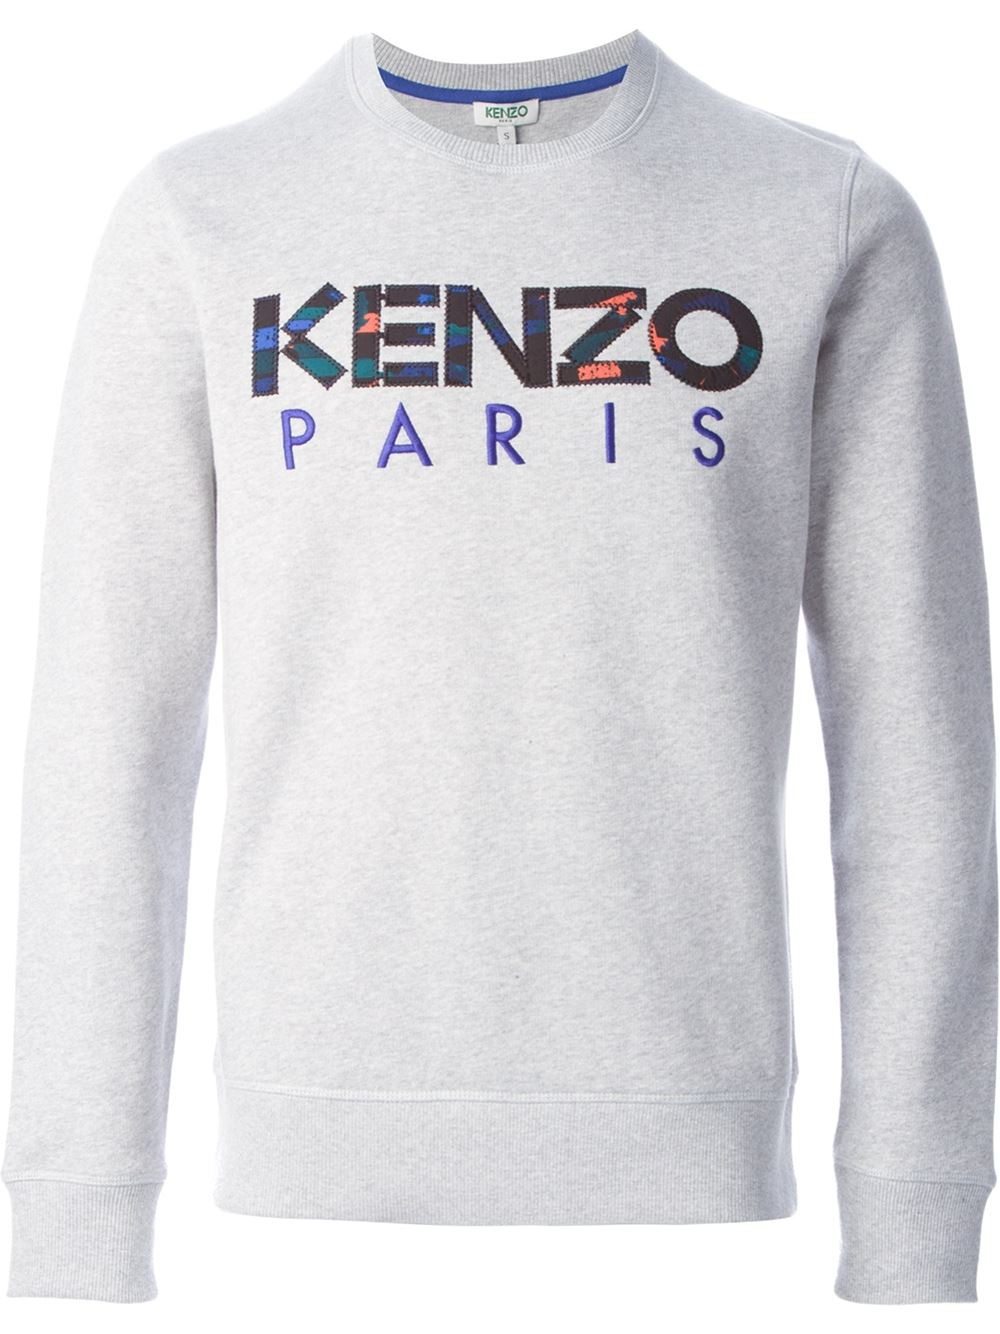 kenzo paris grey sweatshirt